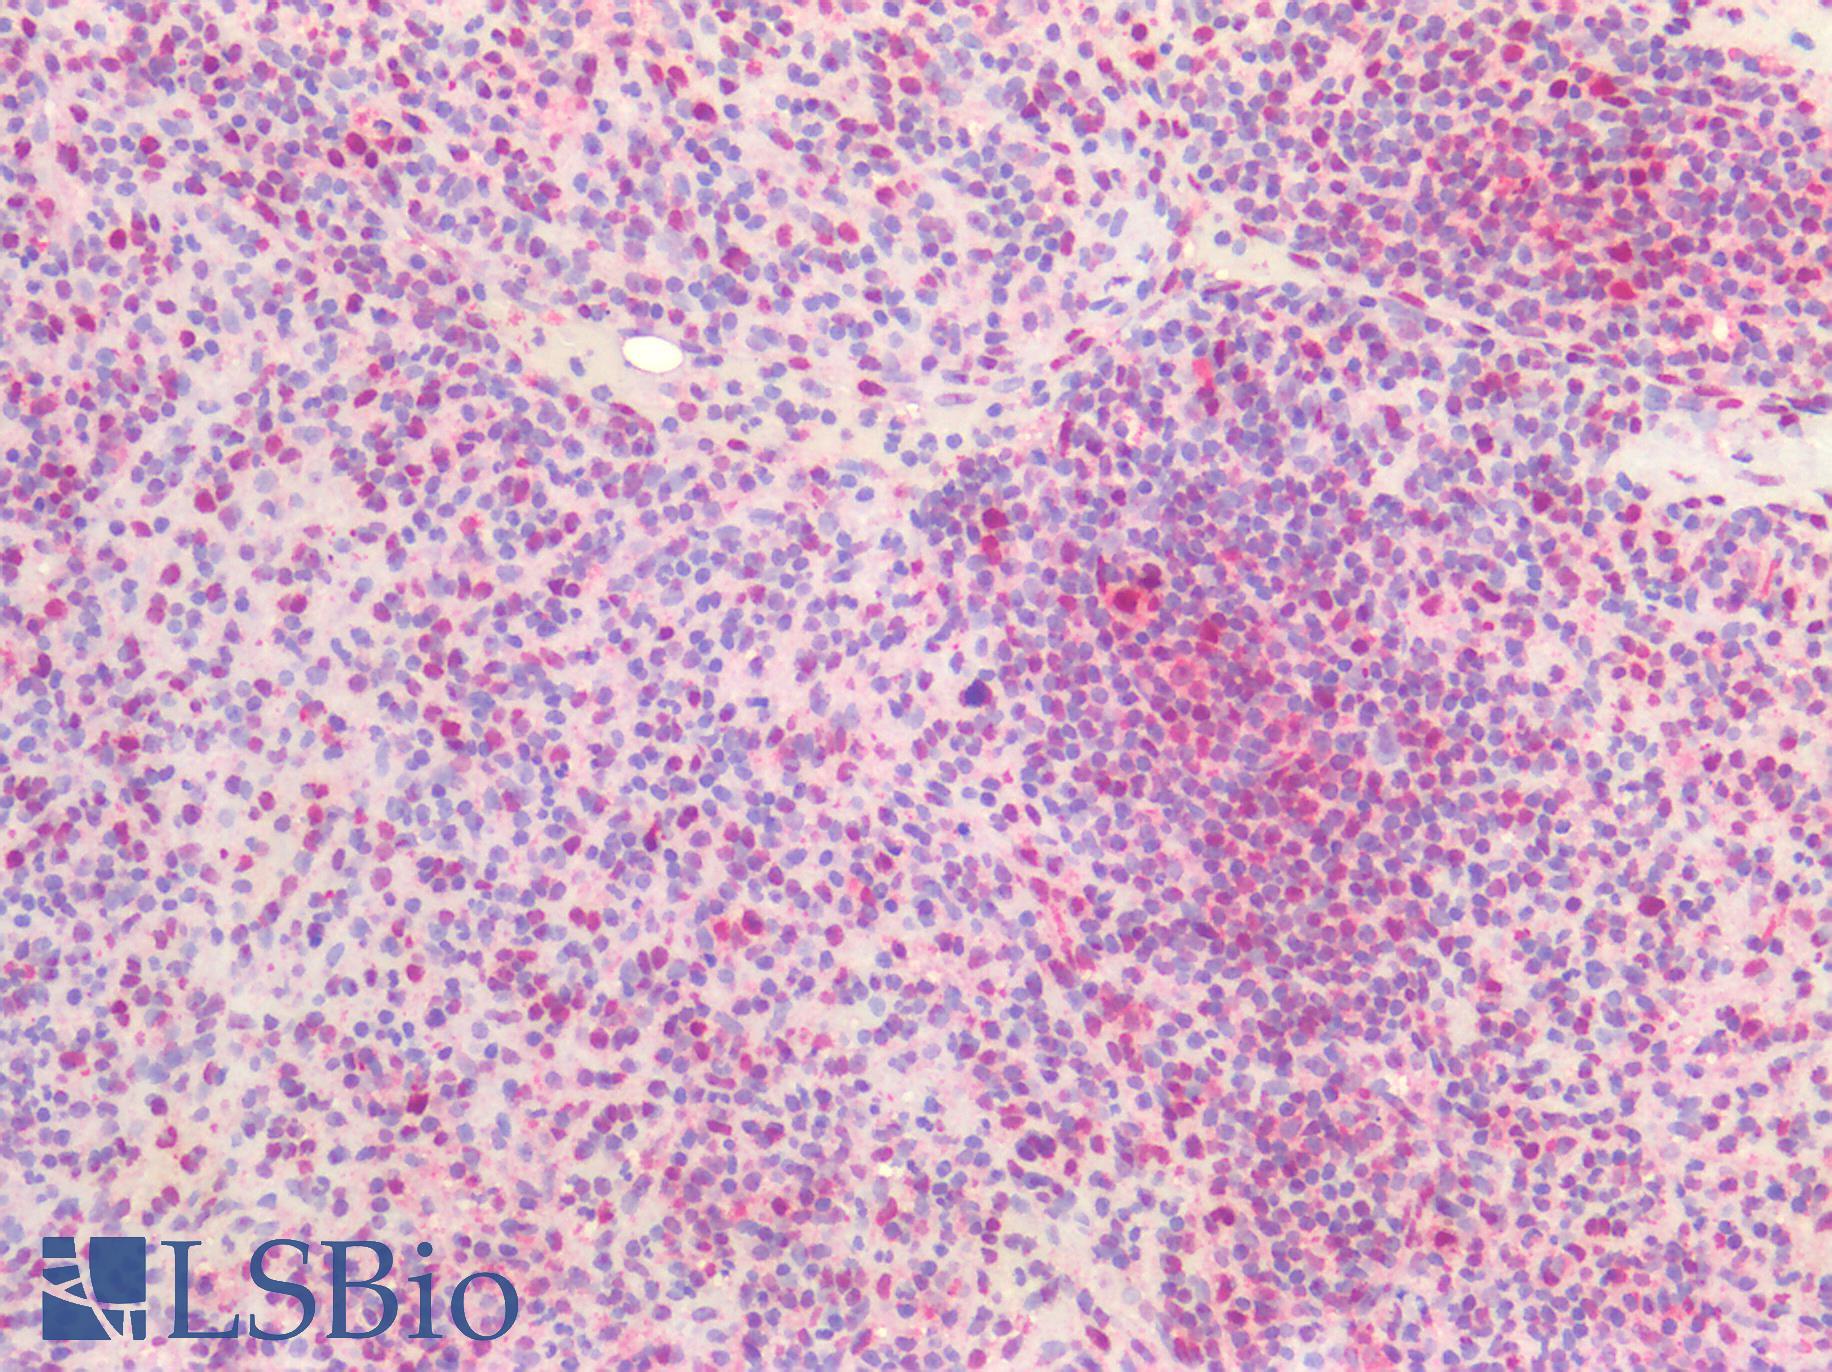 BAD Antibody - Human Spleen: Formalin-Fixed, Paraffin-Embedded (FFPE)